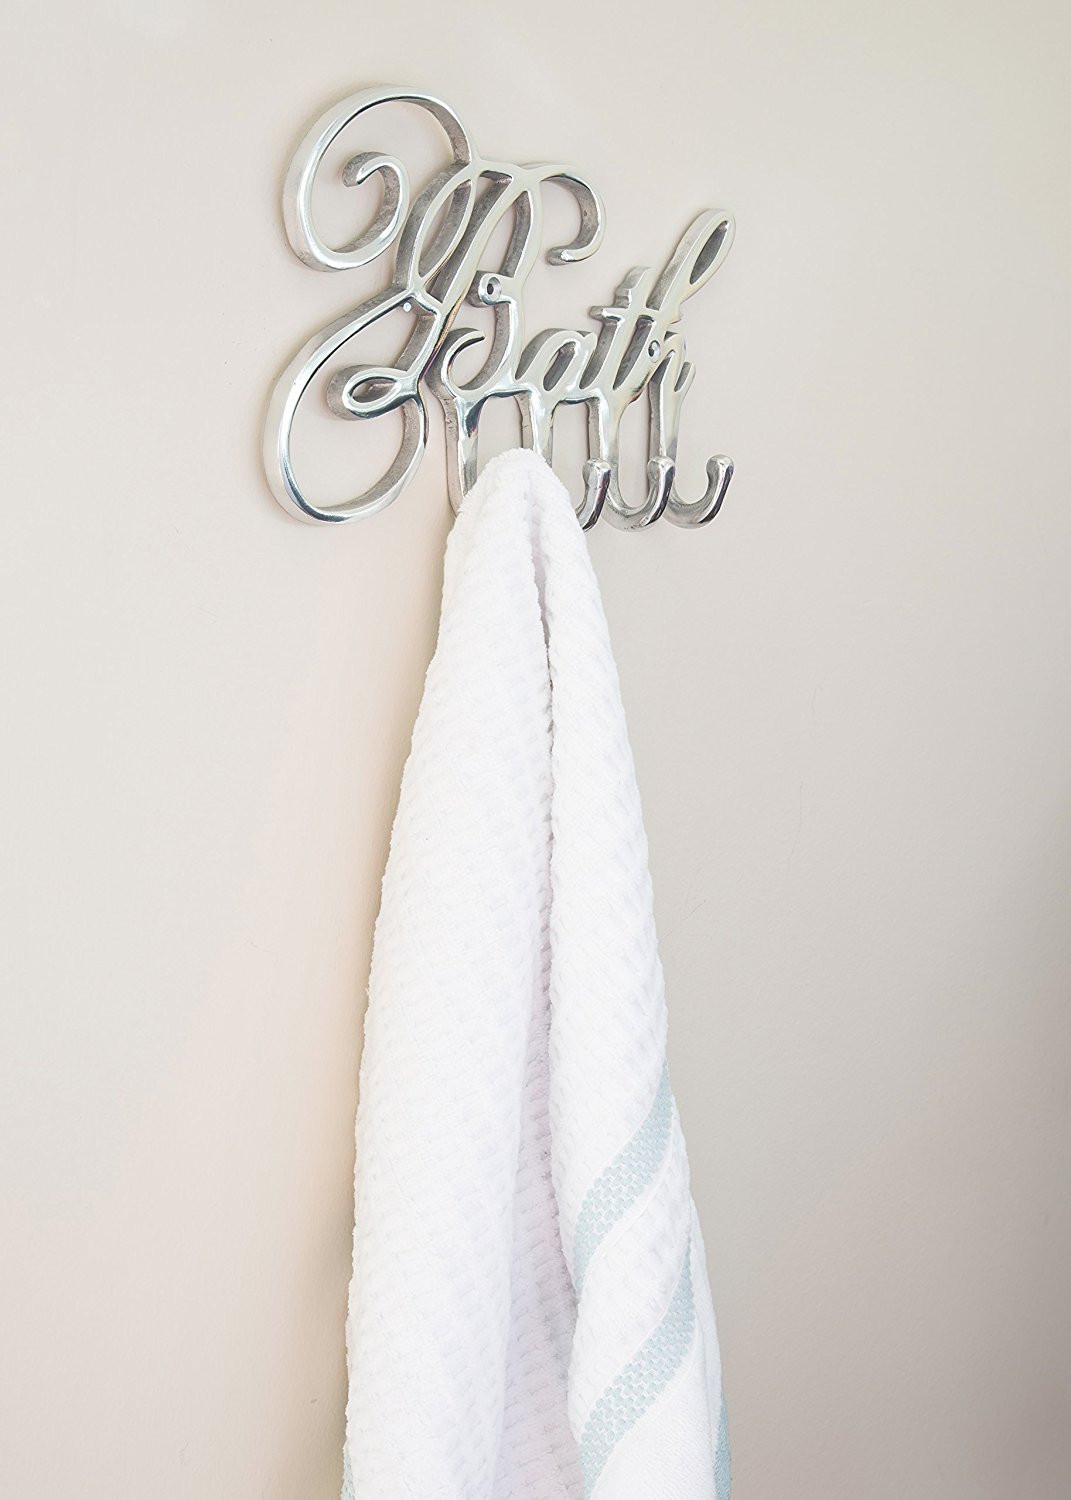 Decorative Bathroom Hooks
 Decorative Bath Towel Hooks Bathroom Hanger by fify